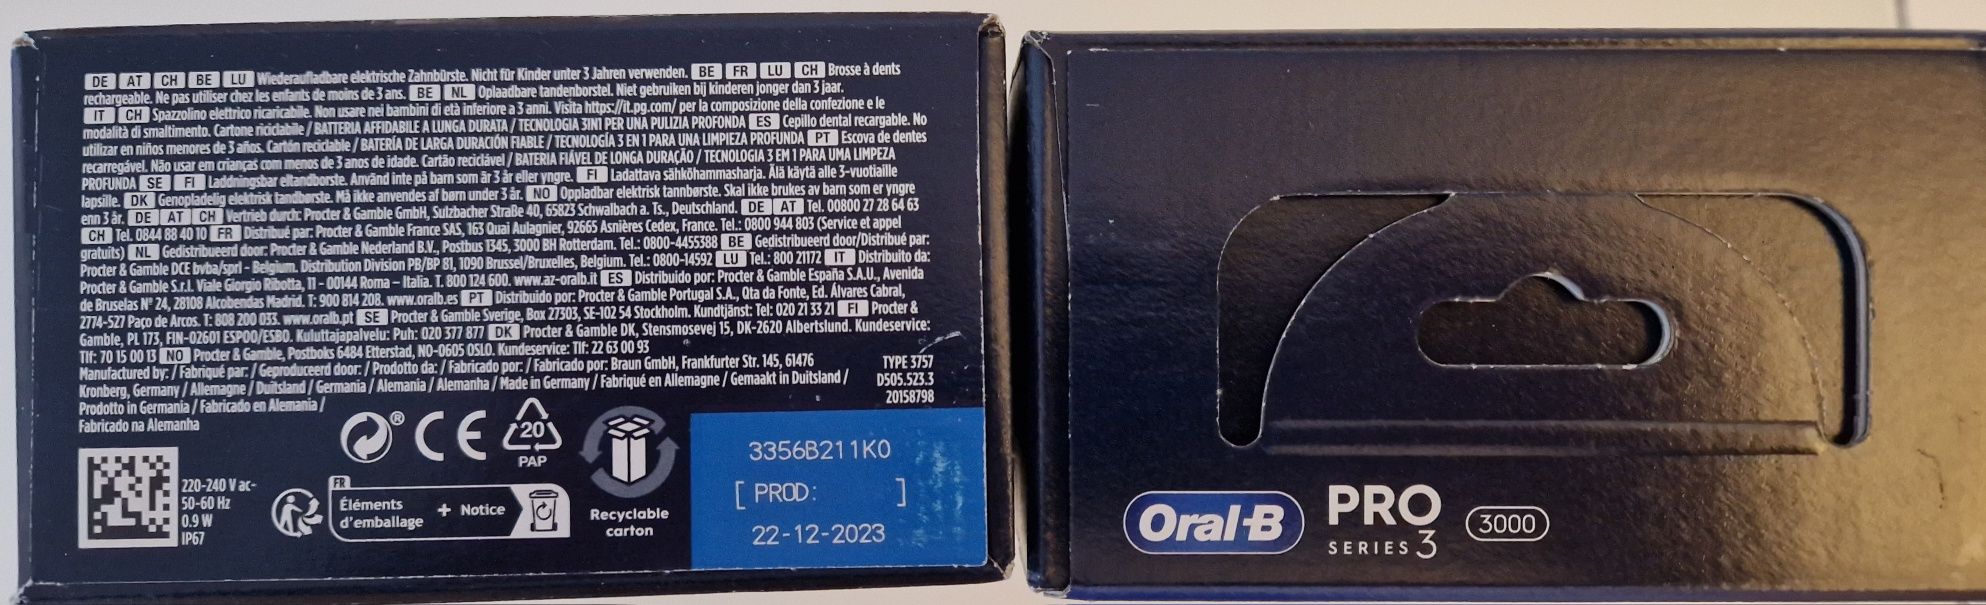 Новая оригинальная Oral-B pro 3+ пачка насадок 4шт